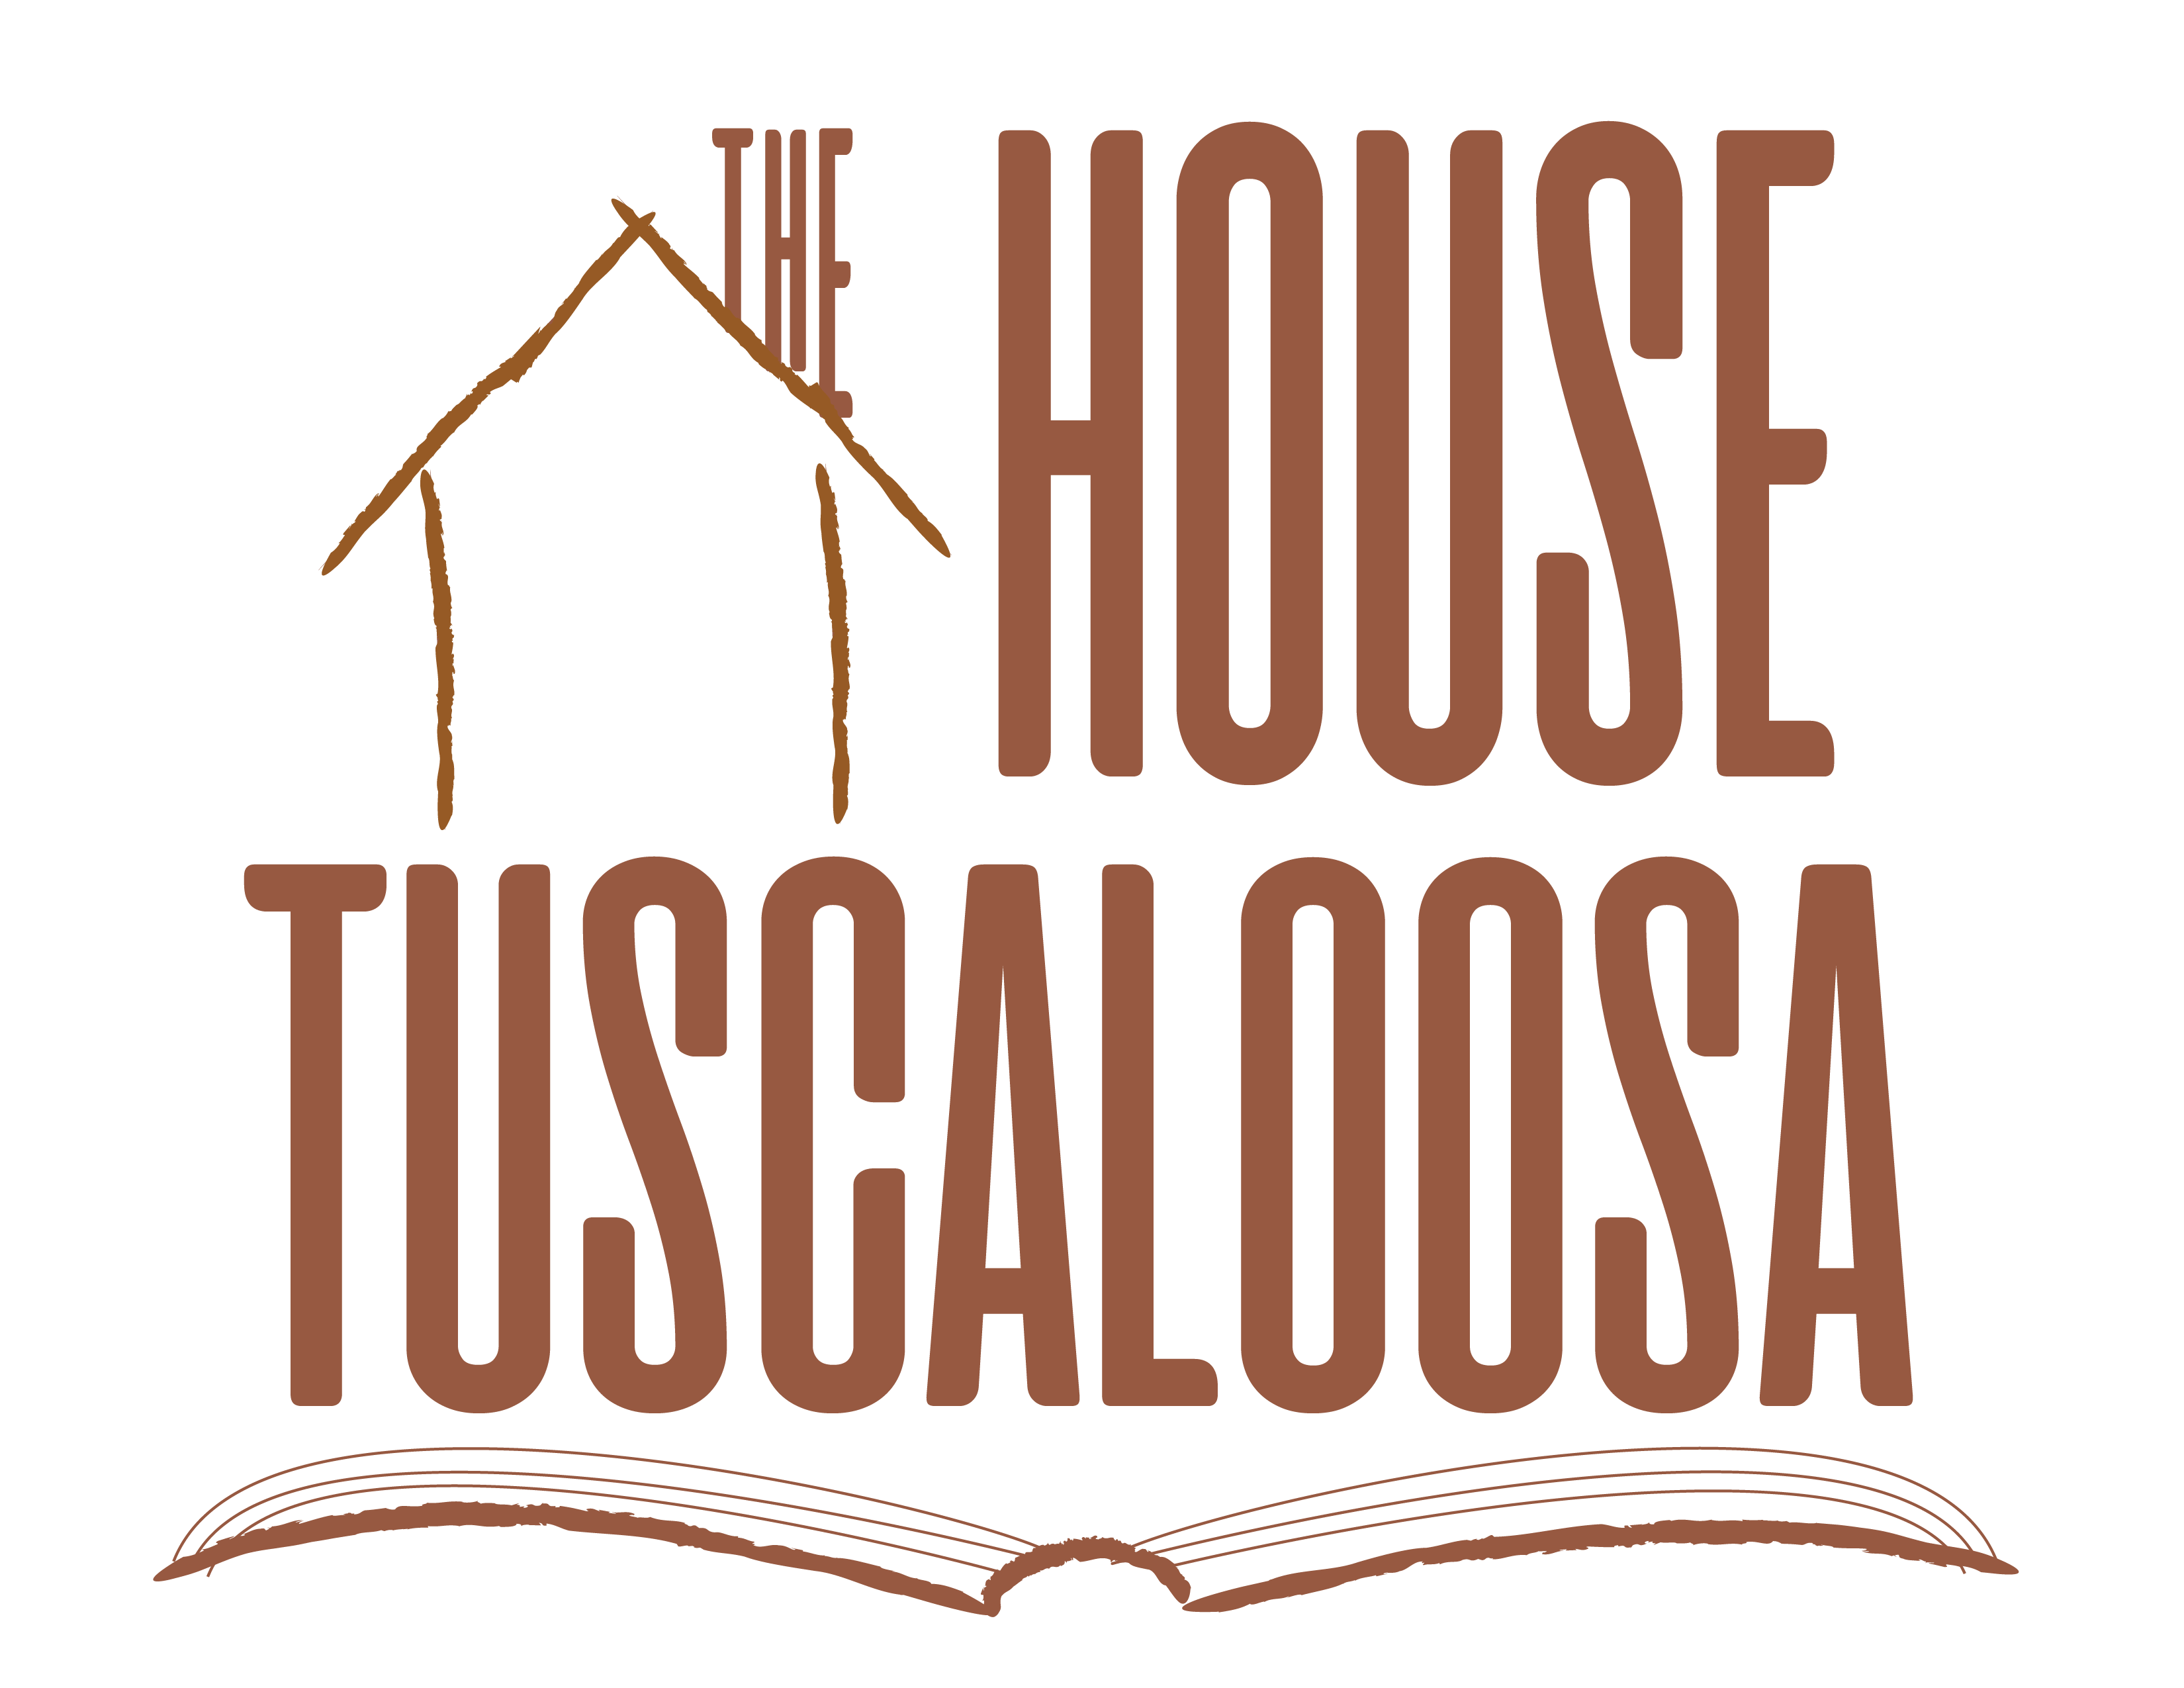 The House Tuscaloosa